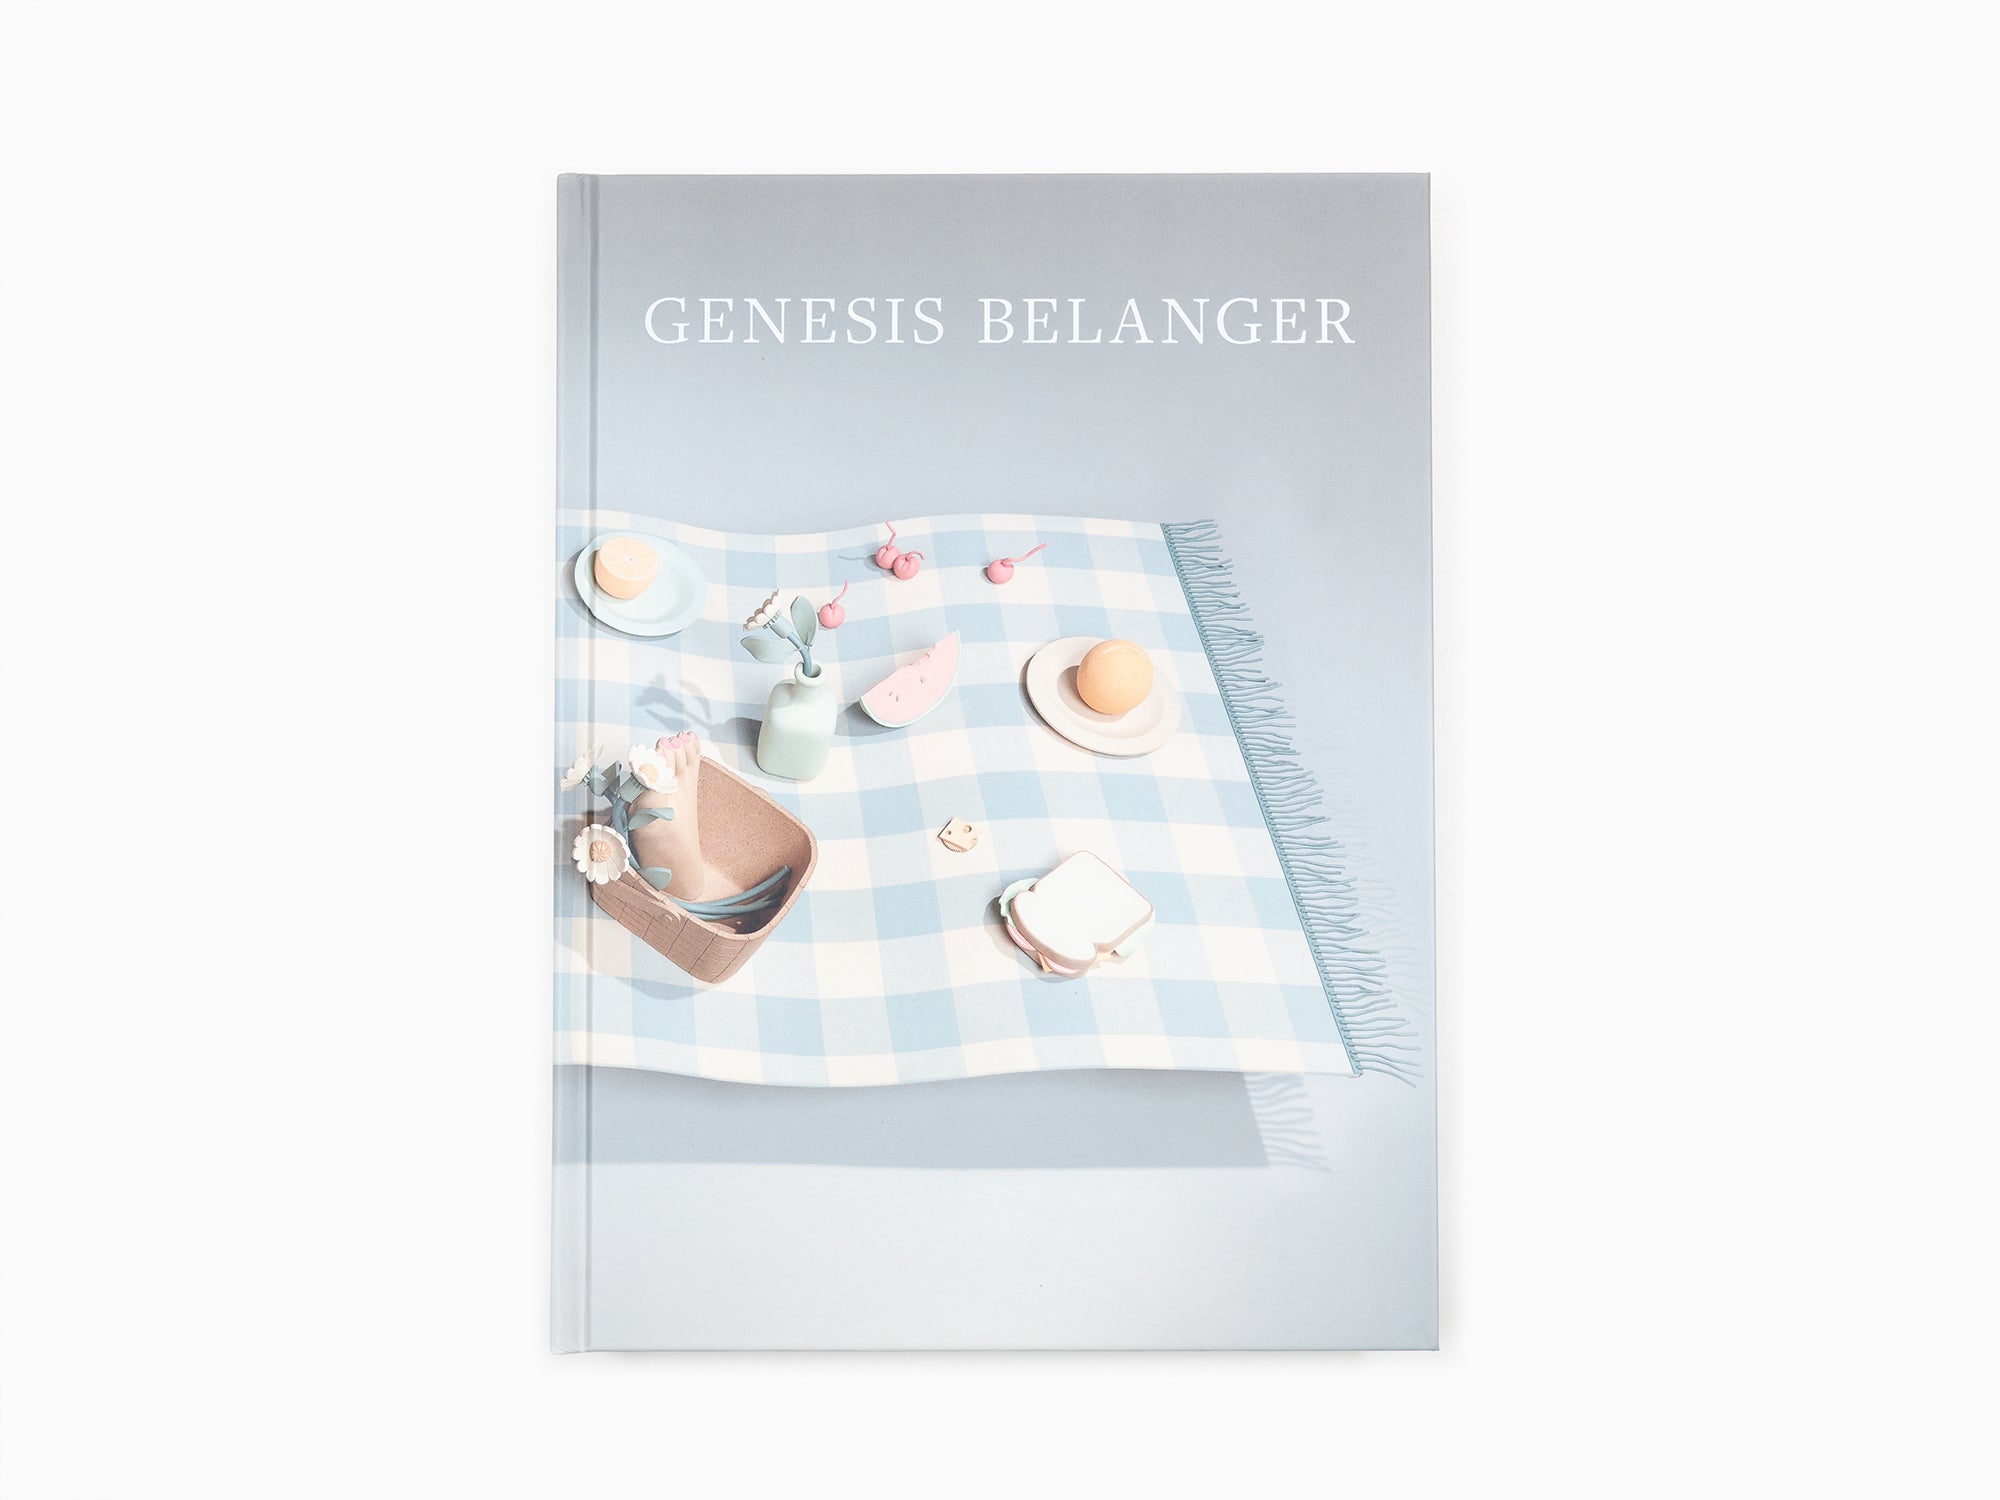 Genesis Belanger - Genesis Belanger (Perrotin monograph)